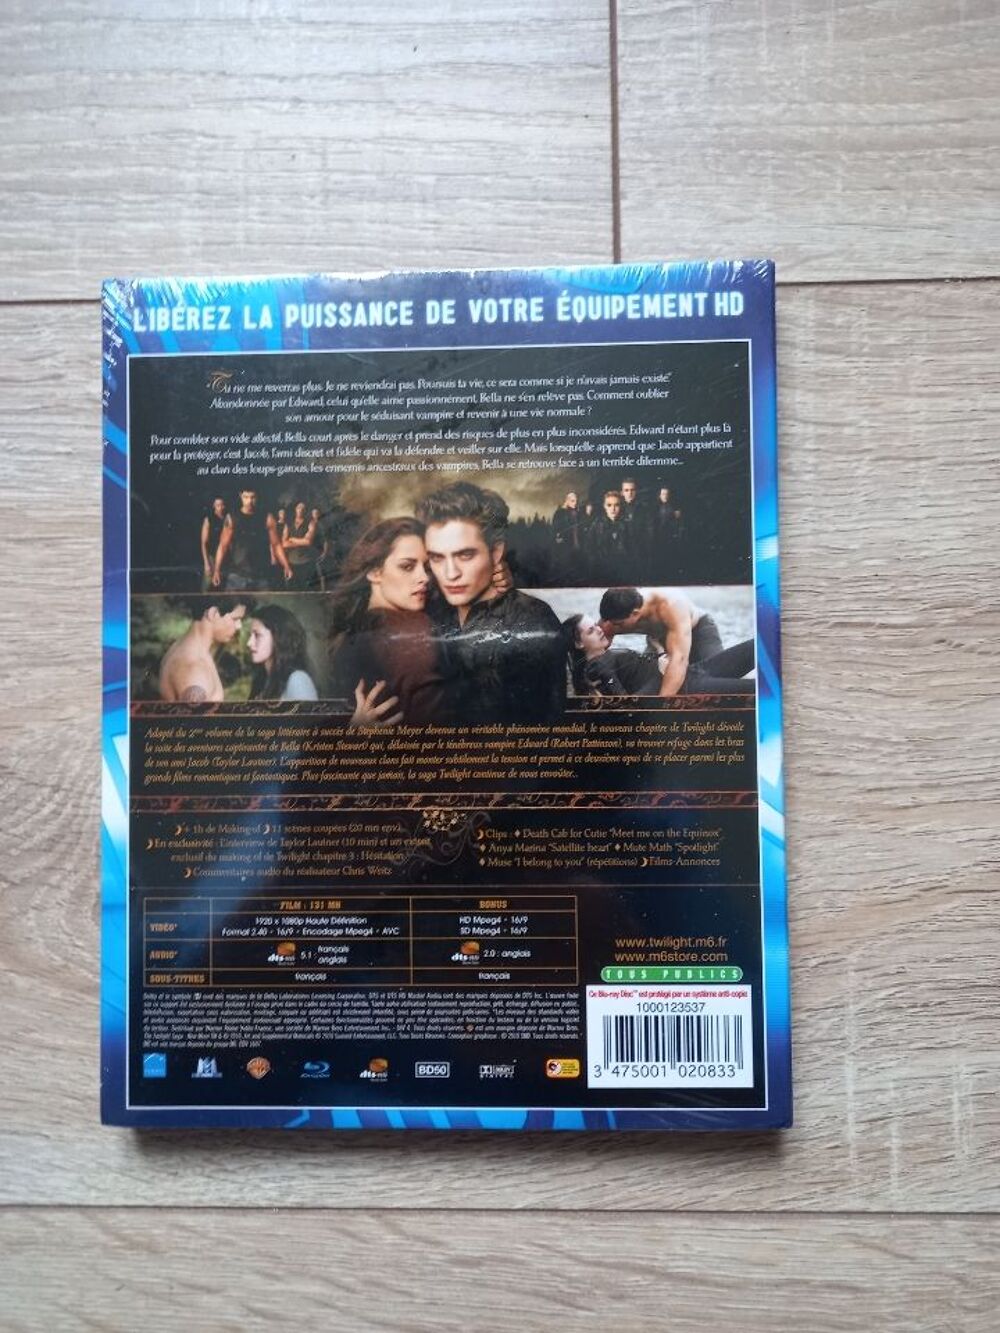 Twilight - Chapitre 2 : Tentation - Blu-ray&nbsp; Chris Weitz // DVD et blu-ray